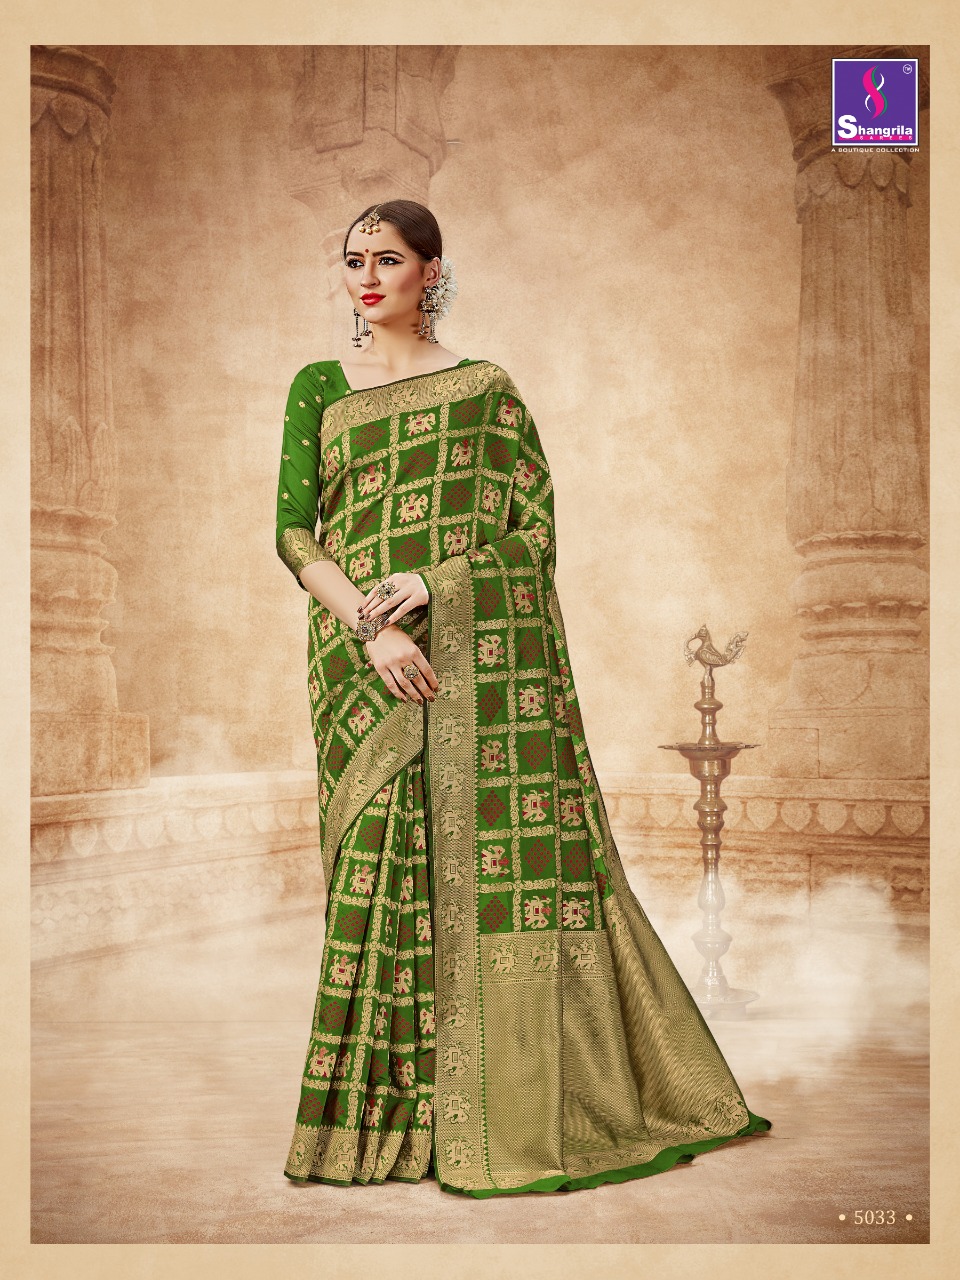 Shangrila rajwadi Patola beautiful Ethnic wear rich look sarees collection